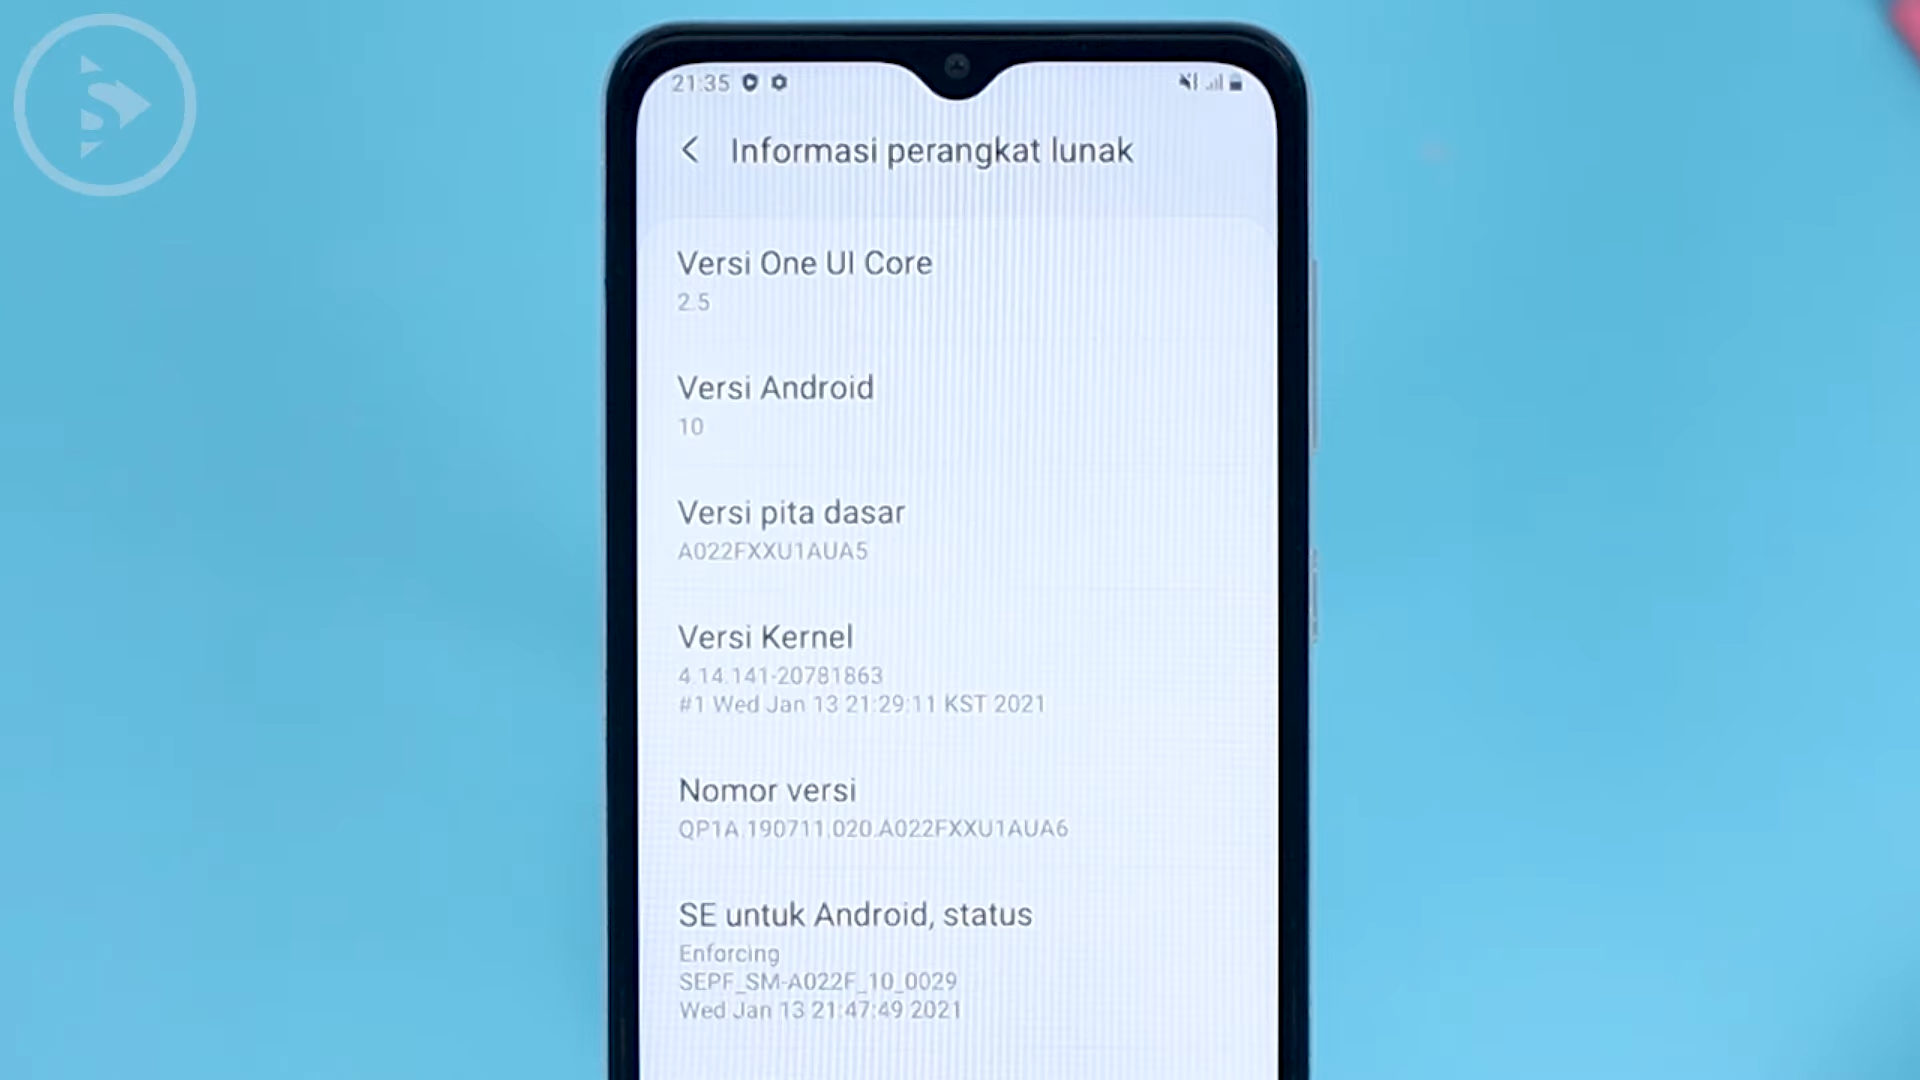 One UI Version of Samsung Galaxy A02